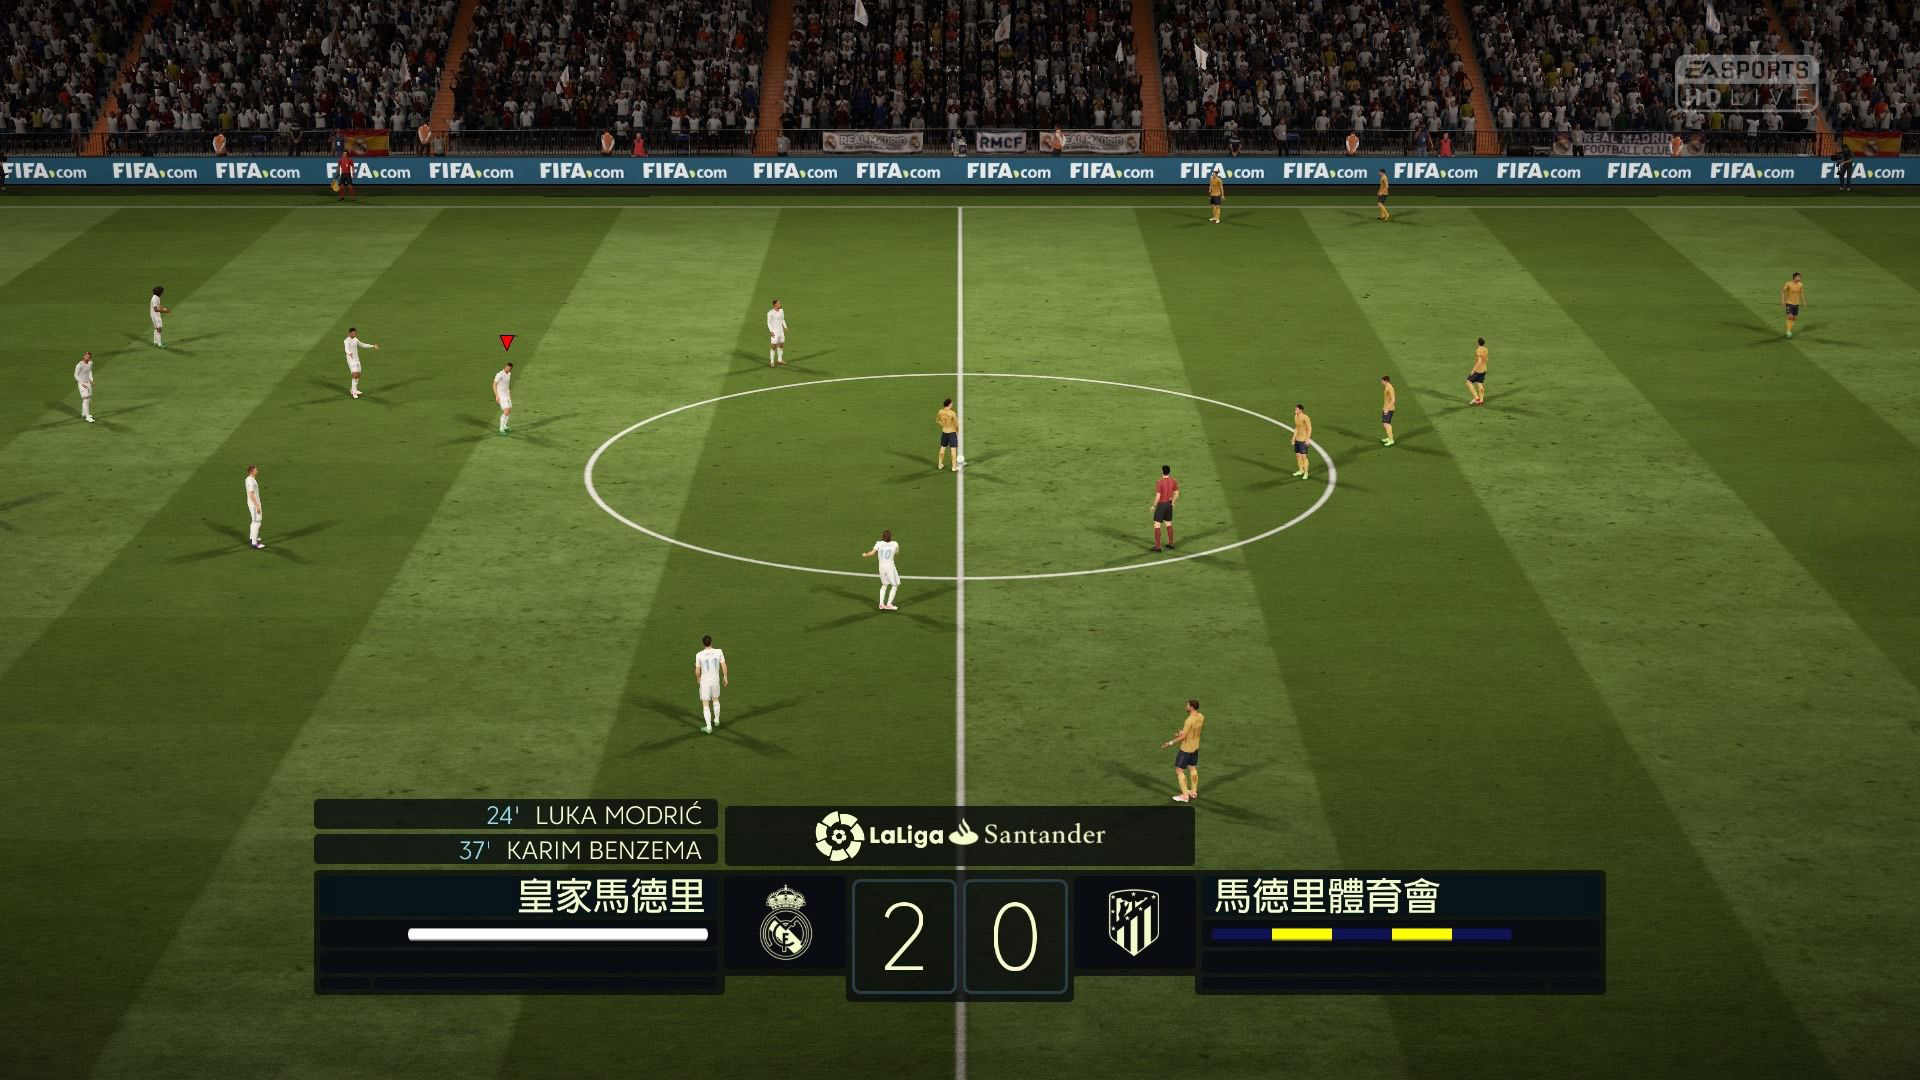 FIFA 18 中文版